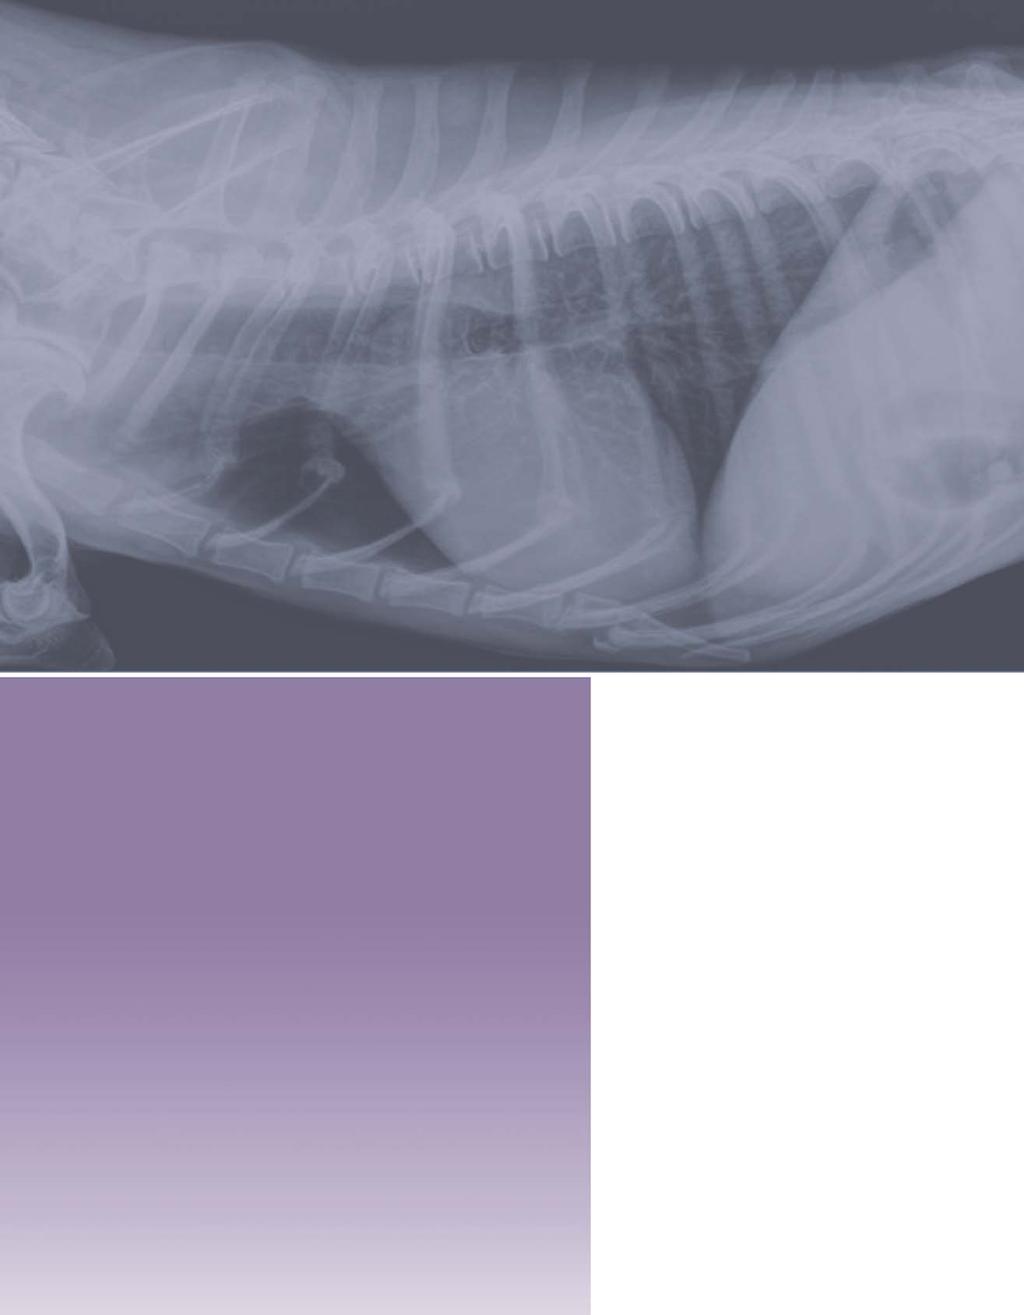 Veterinary Digital x-ray Services